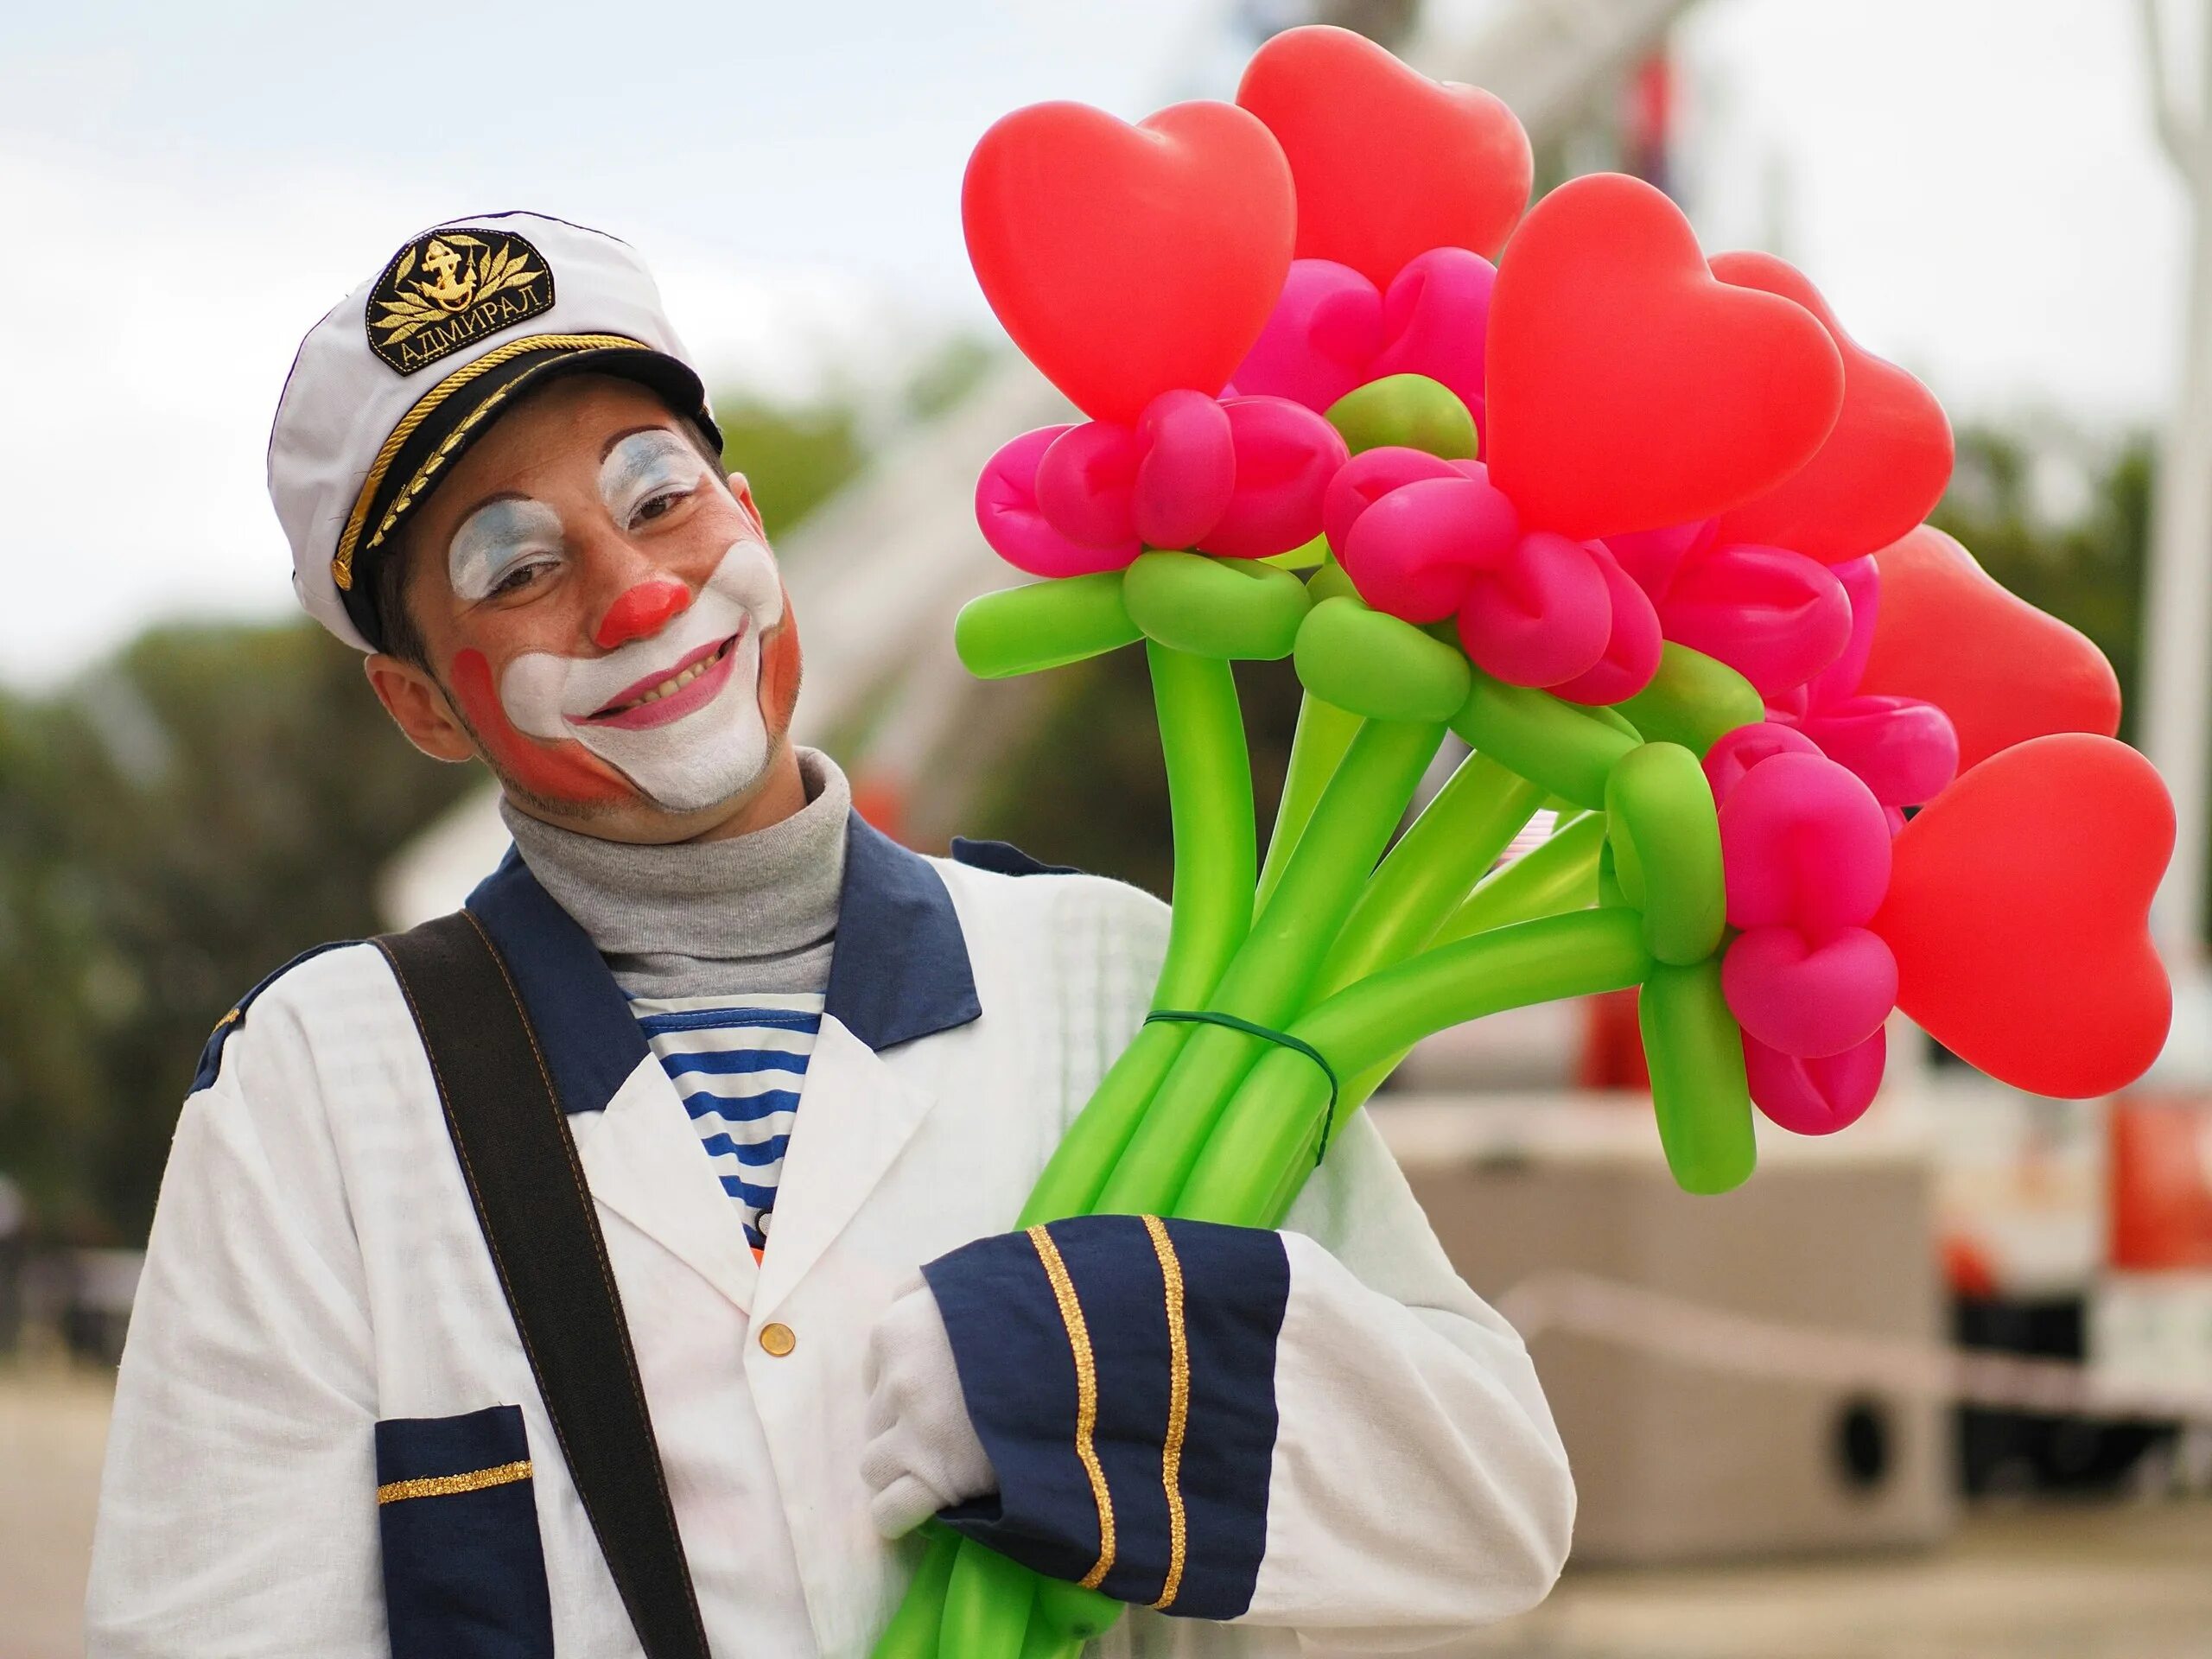 Пикник клоун. Стильный клоун. Клоун с букетом. Клоун с воздушными шариками. Клоун с цветами.